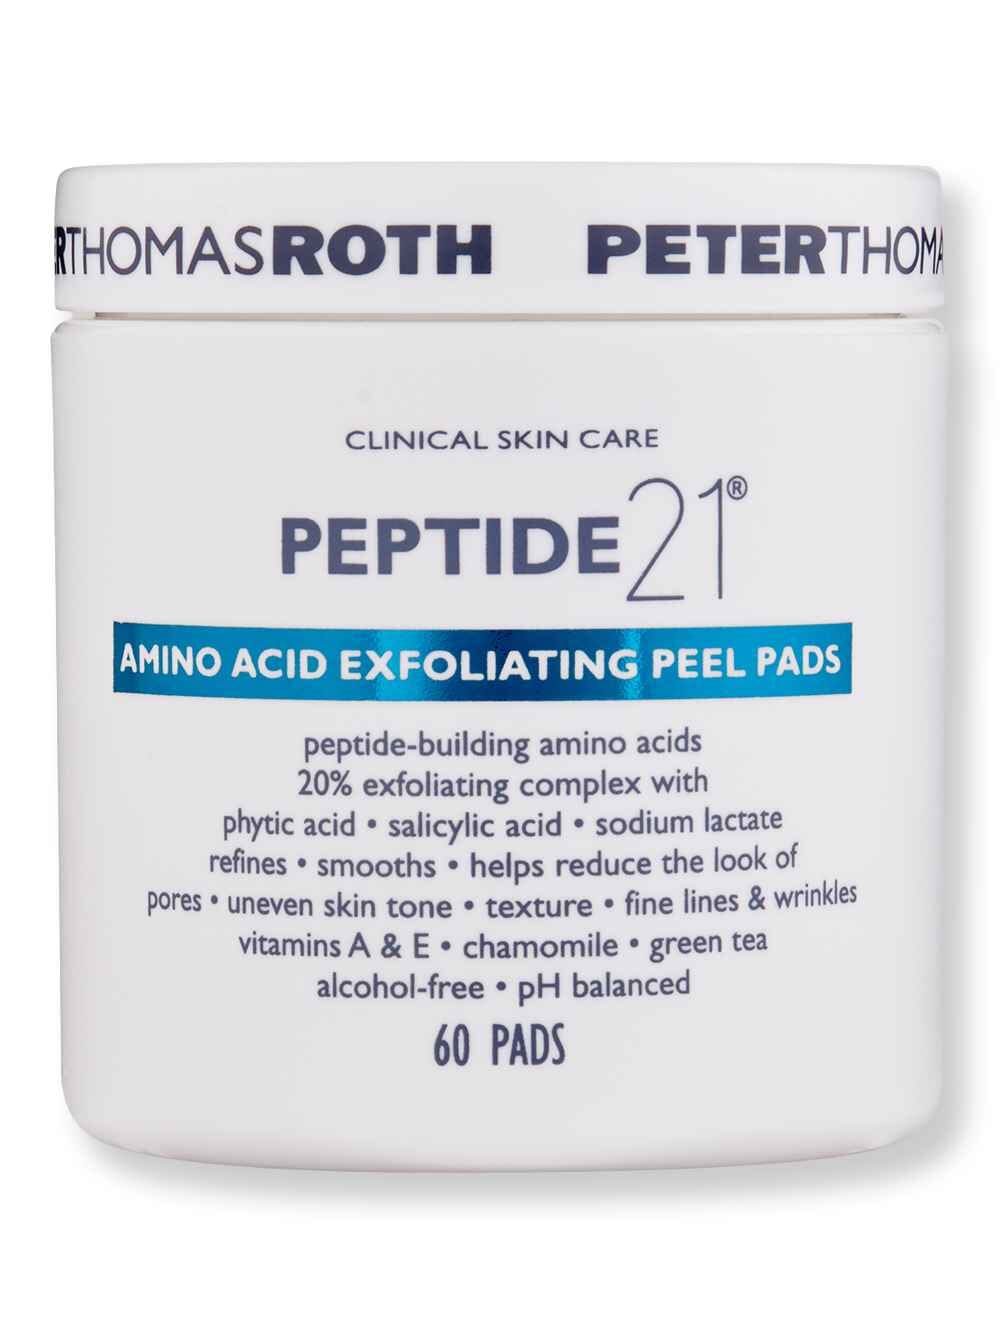 Peter Thomas Roth Peter Thomas Roth Peptide 21 Amino Acid Exfoliating Peel Pads 60 Ct Exfoliators & Peels 